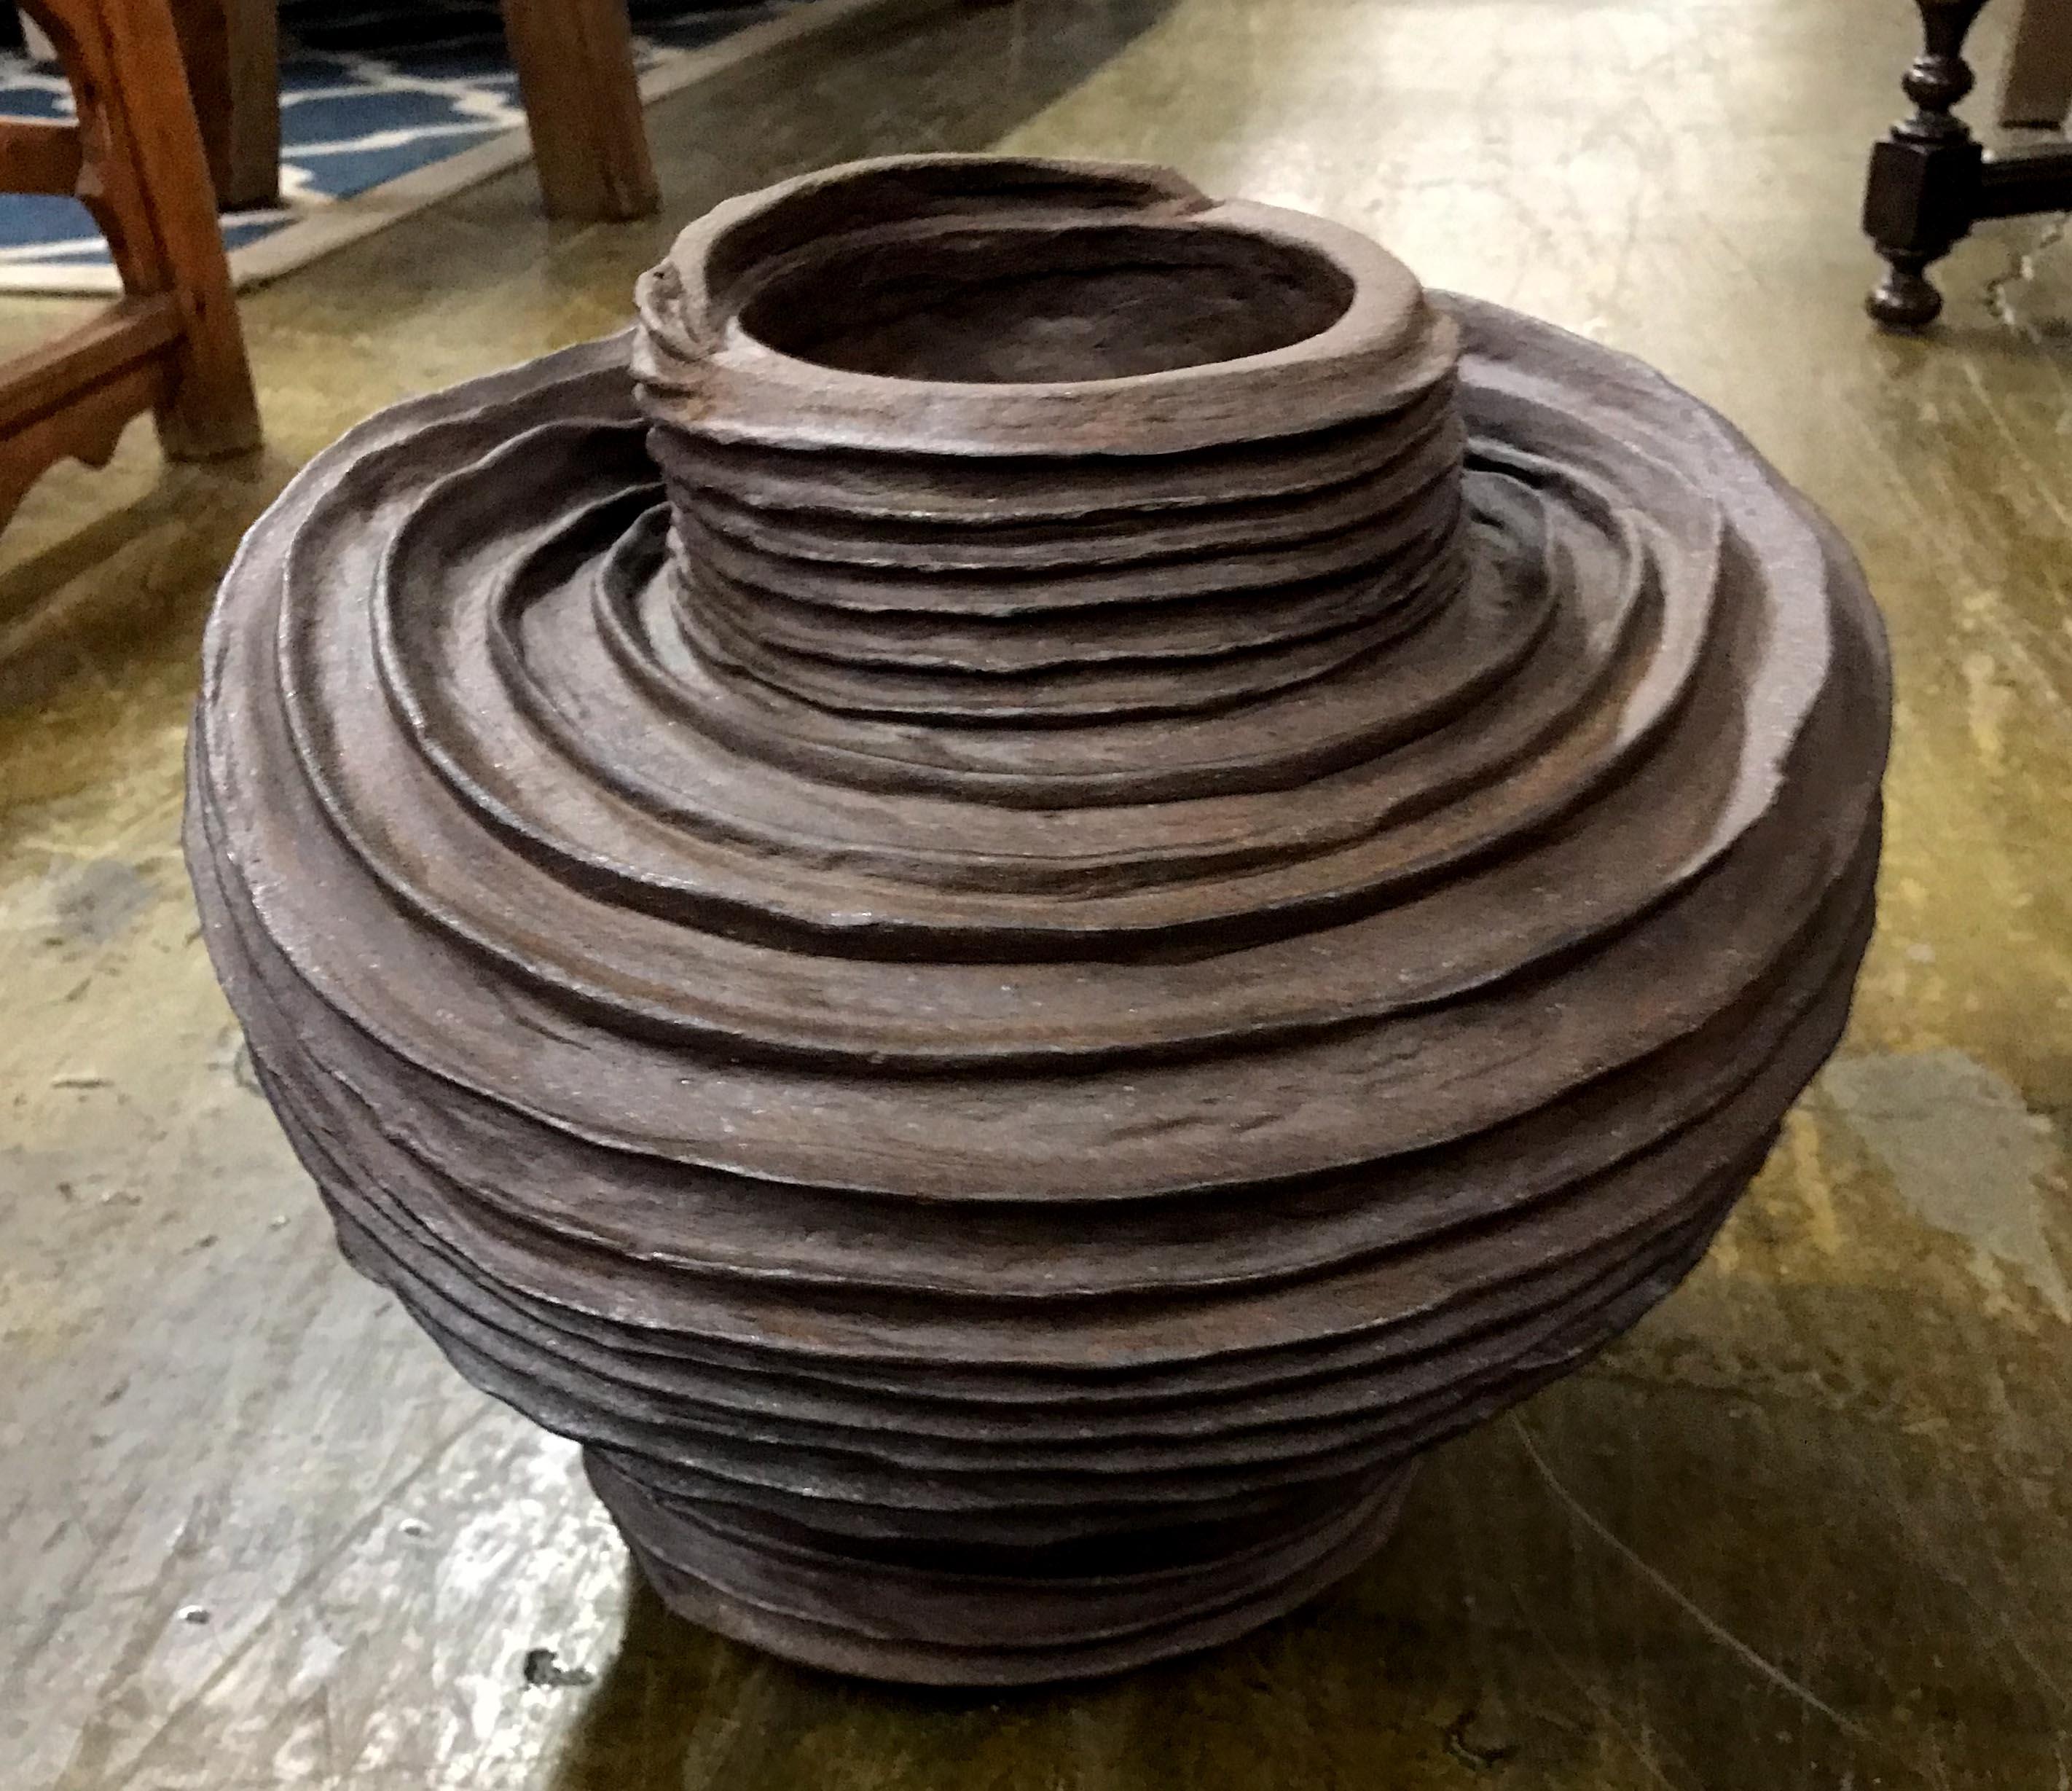 Hand built ridge ceramic bowl or vase. Dark iron rich clay. High fire. Cone 10.
Made by Santa Barbara based artist Sally Terrell.